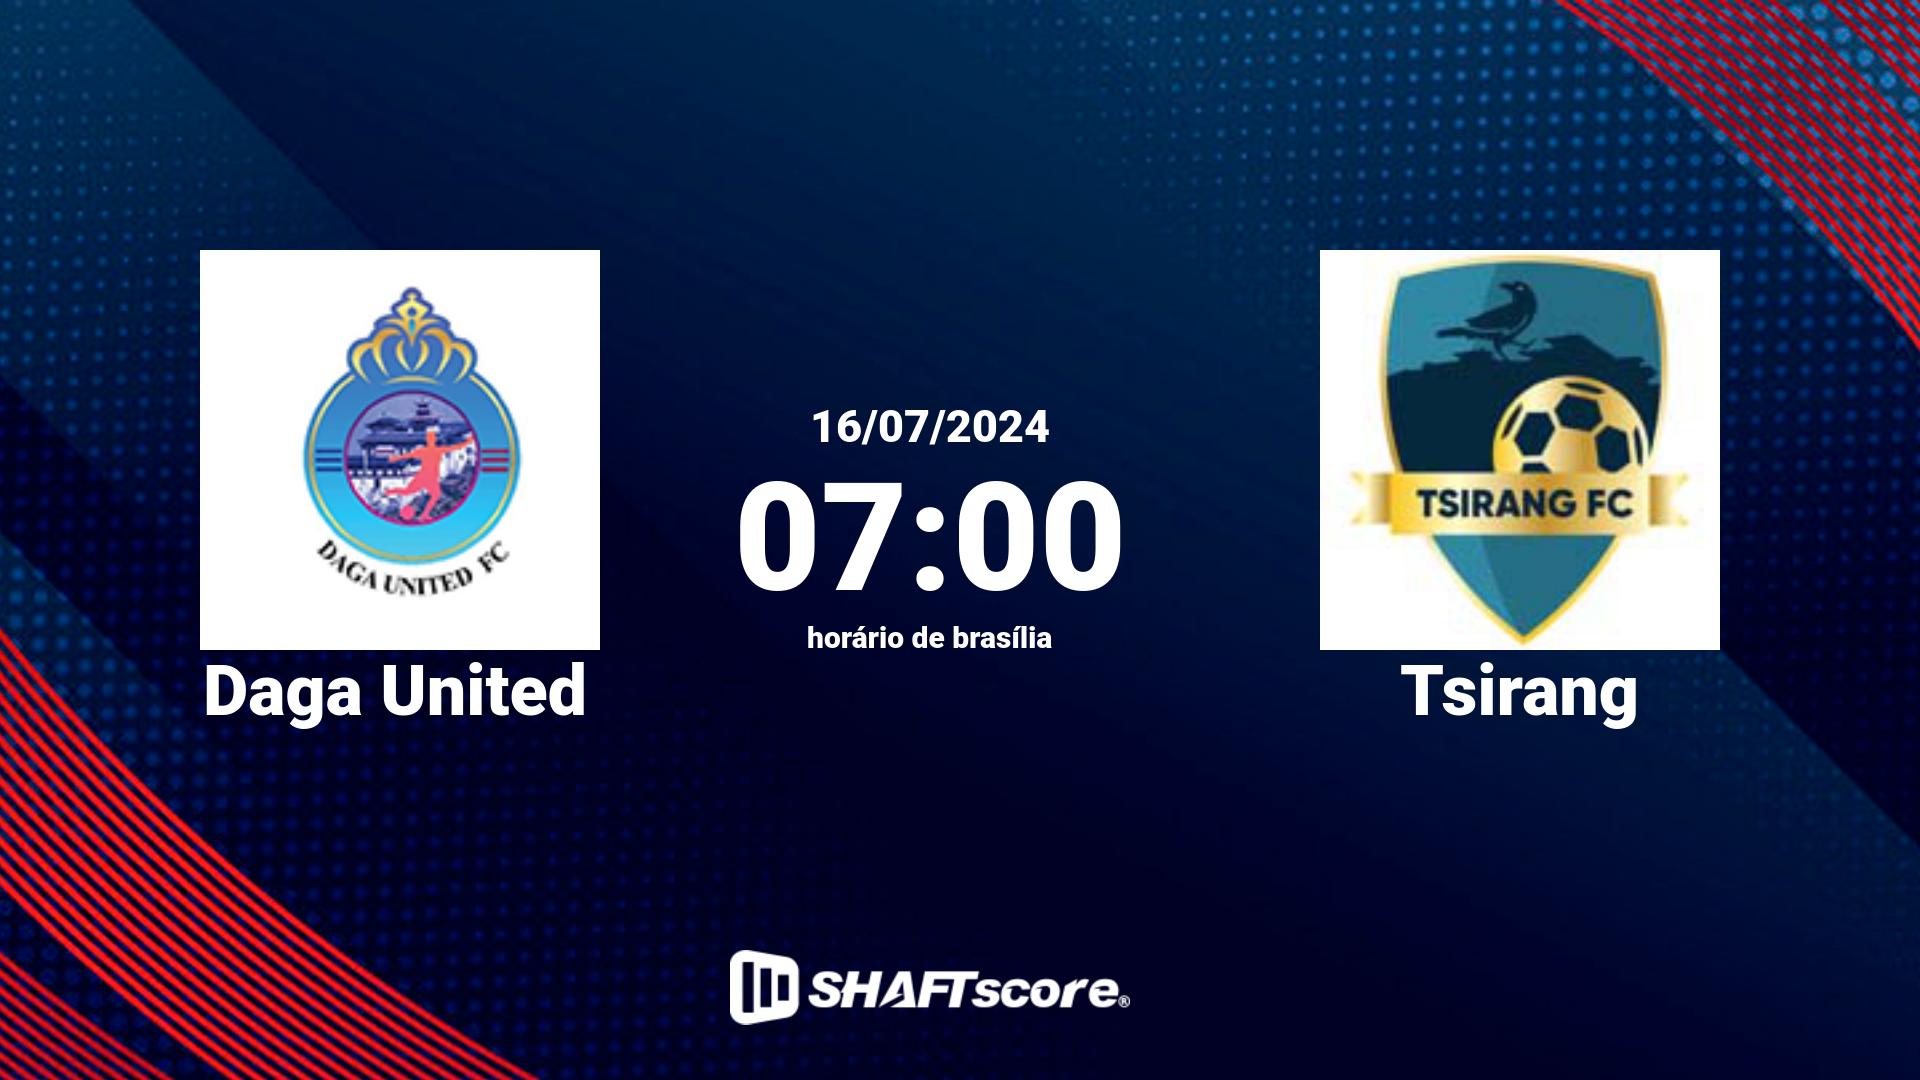 Estatísticas do jogo Daga United vs Tsirang 16.07 07:00